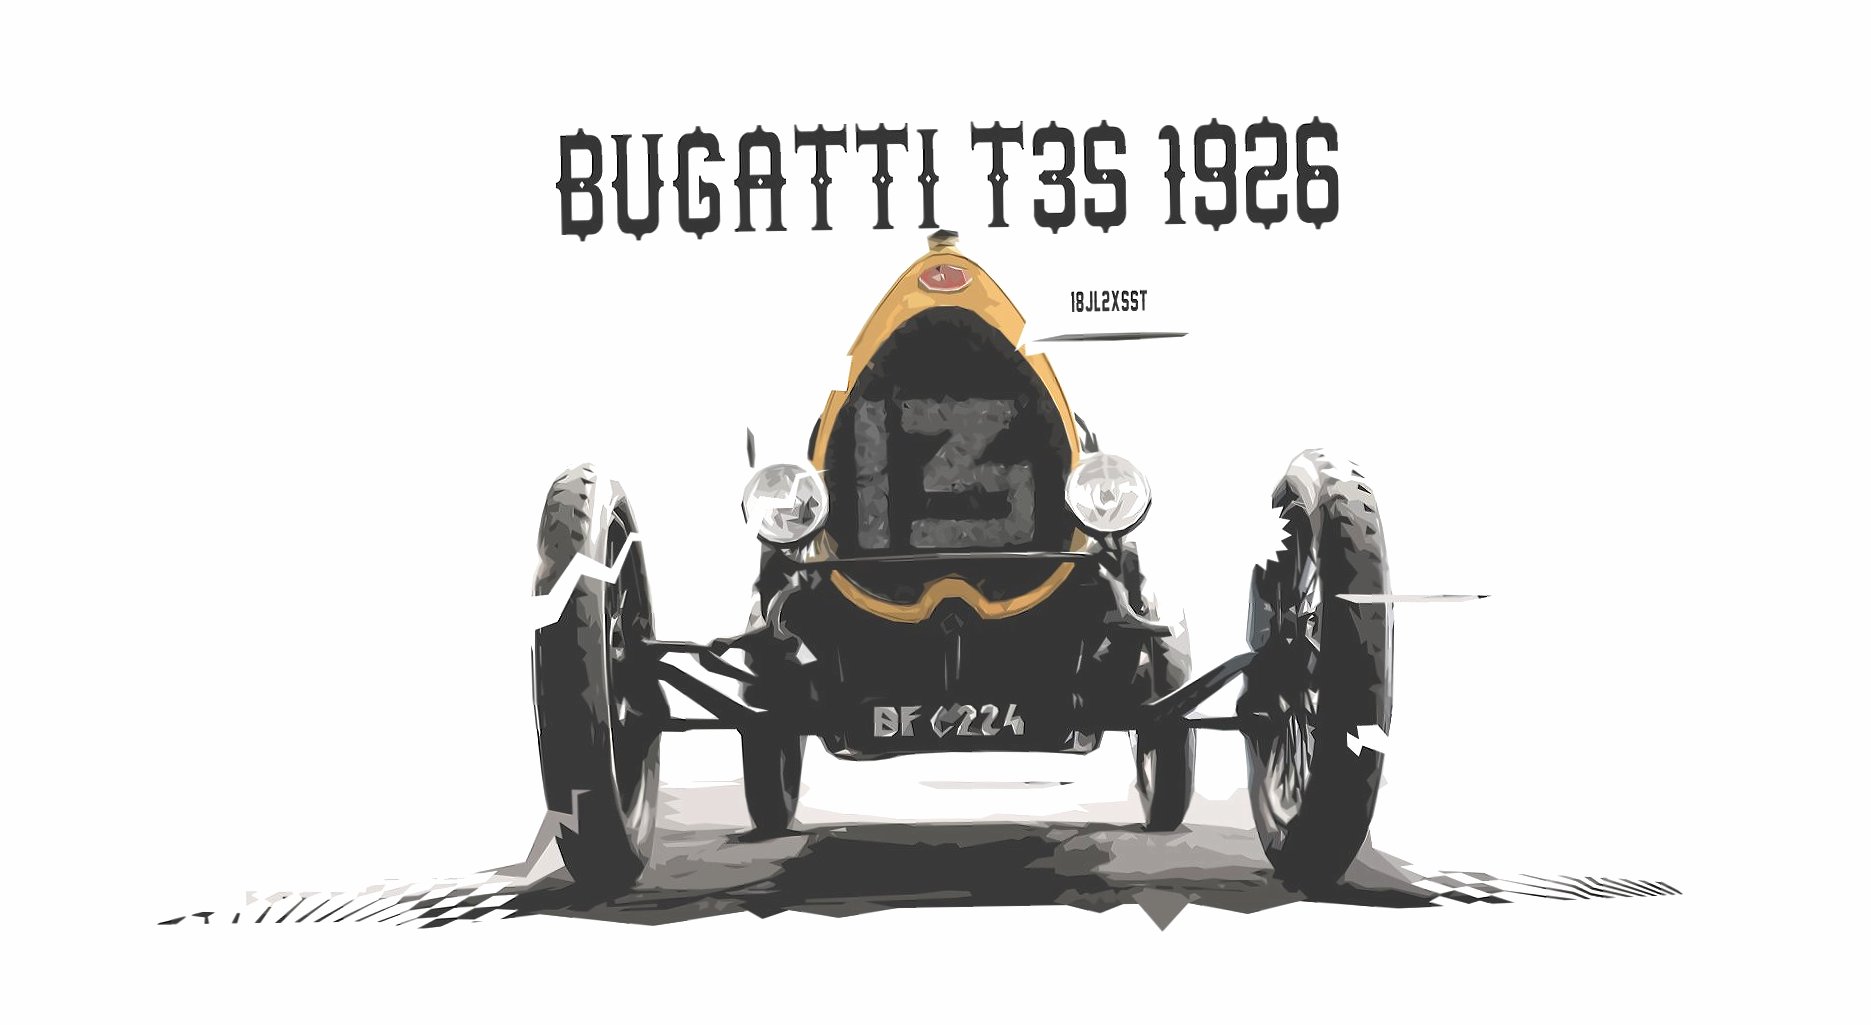 Bugatti Type 35 at 2048 x 2048 iPad size wallpapers HD quality